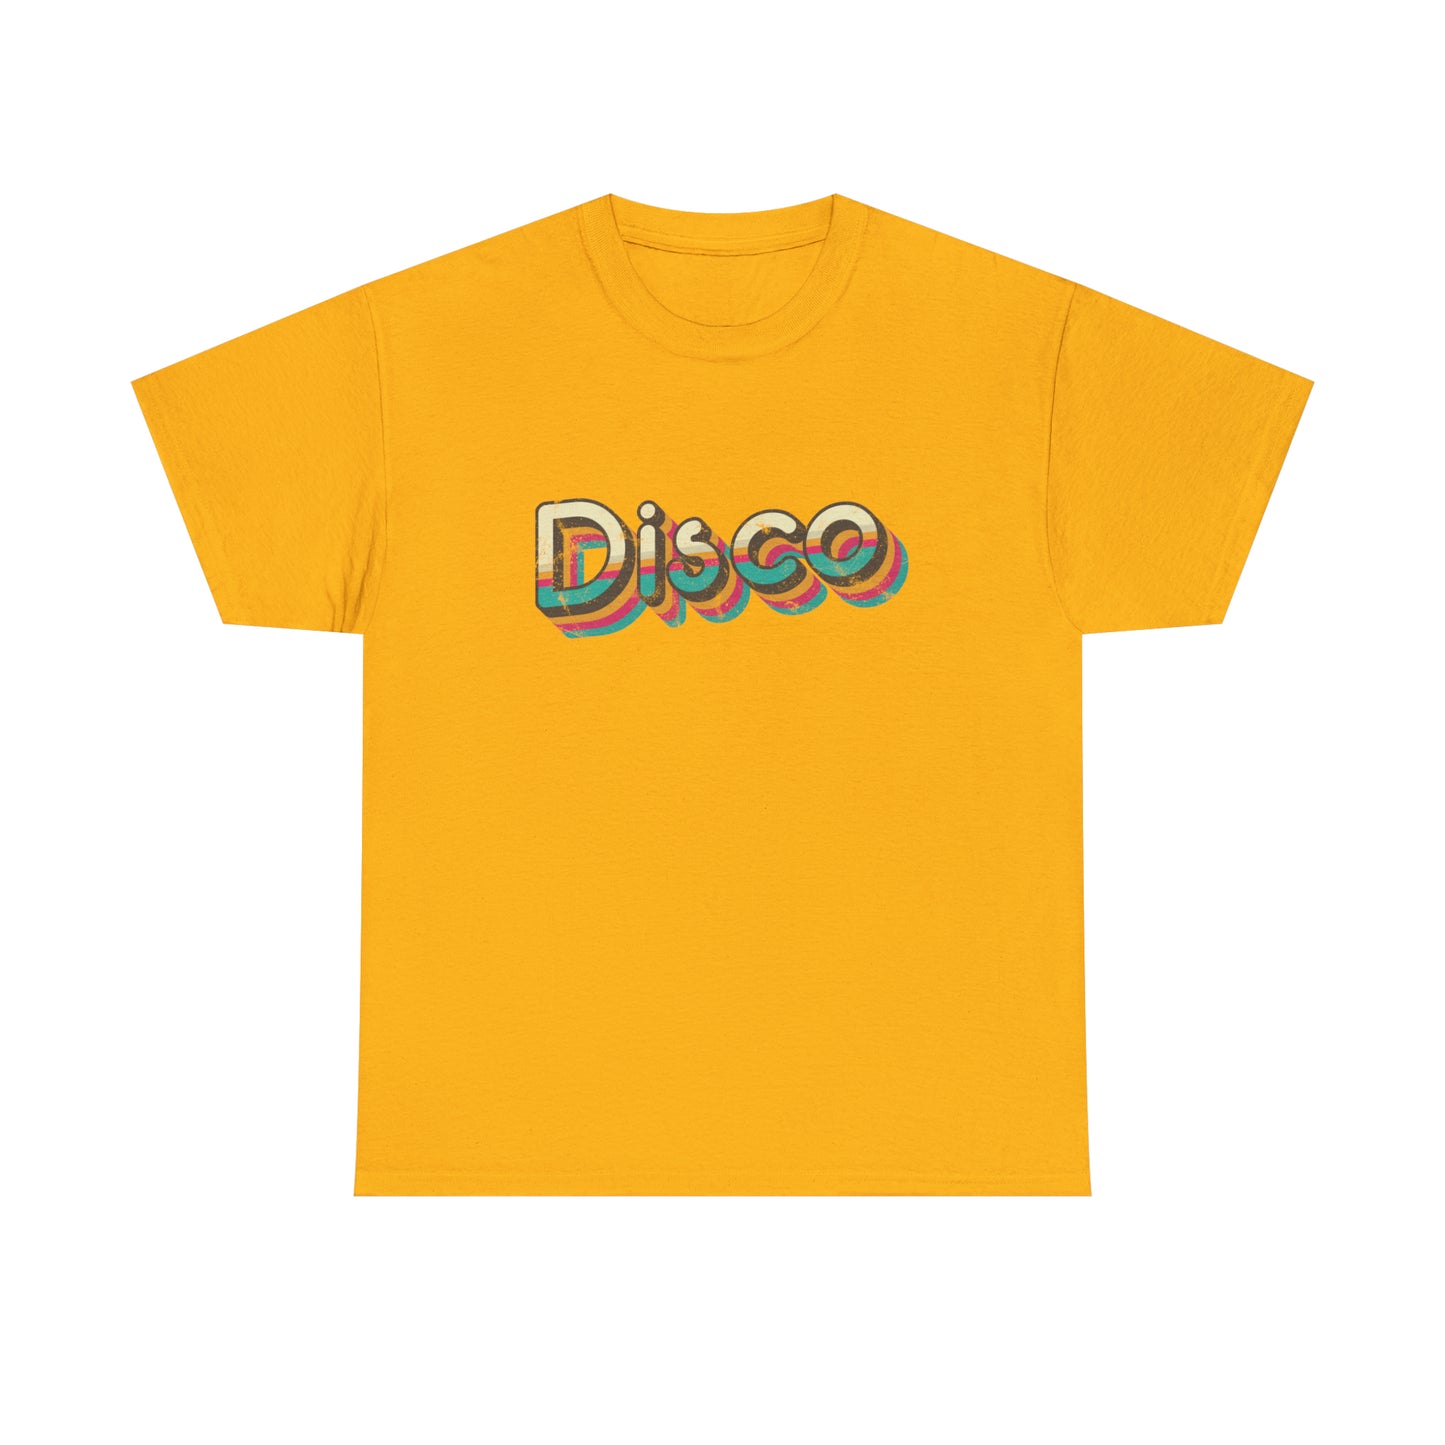 Disco T-Shirt For Seventies TShirt 3D Disco T Shirt For Fun 70s Tee For Retro Vibe Shirt